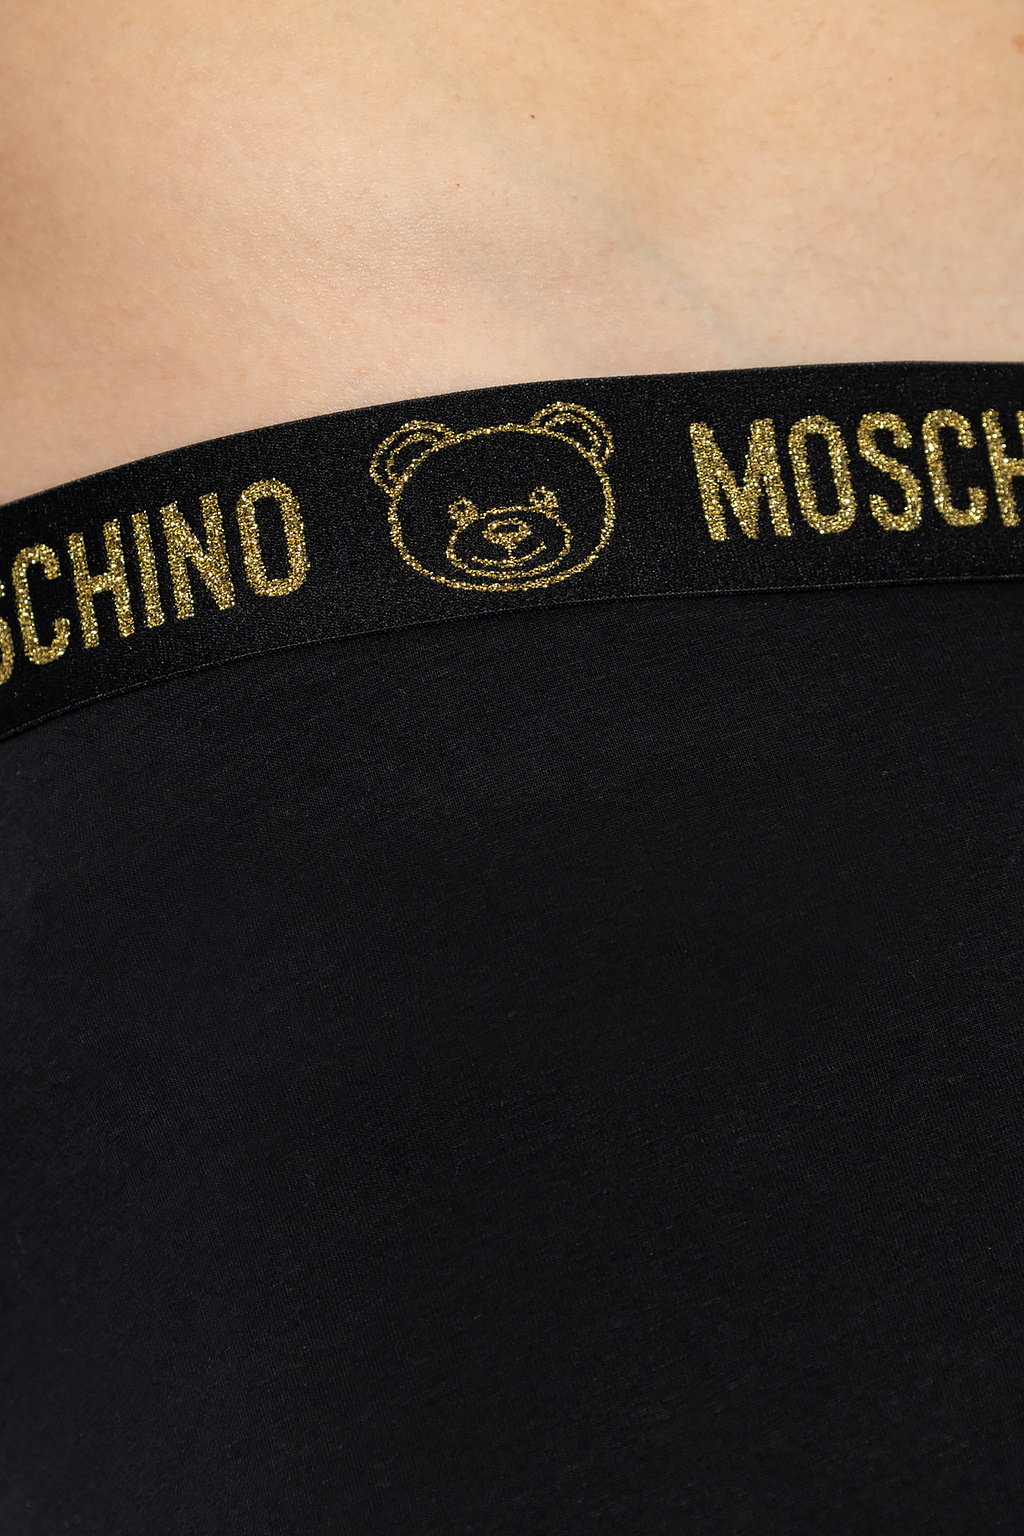 Moschino Champion T-shirt manches raglan avec inscription logo Blanc cassé et bleu